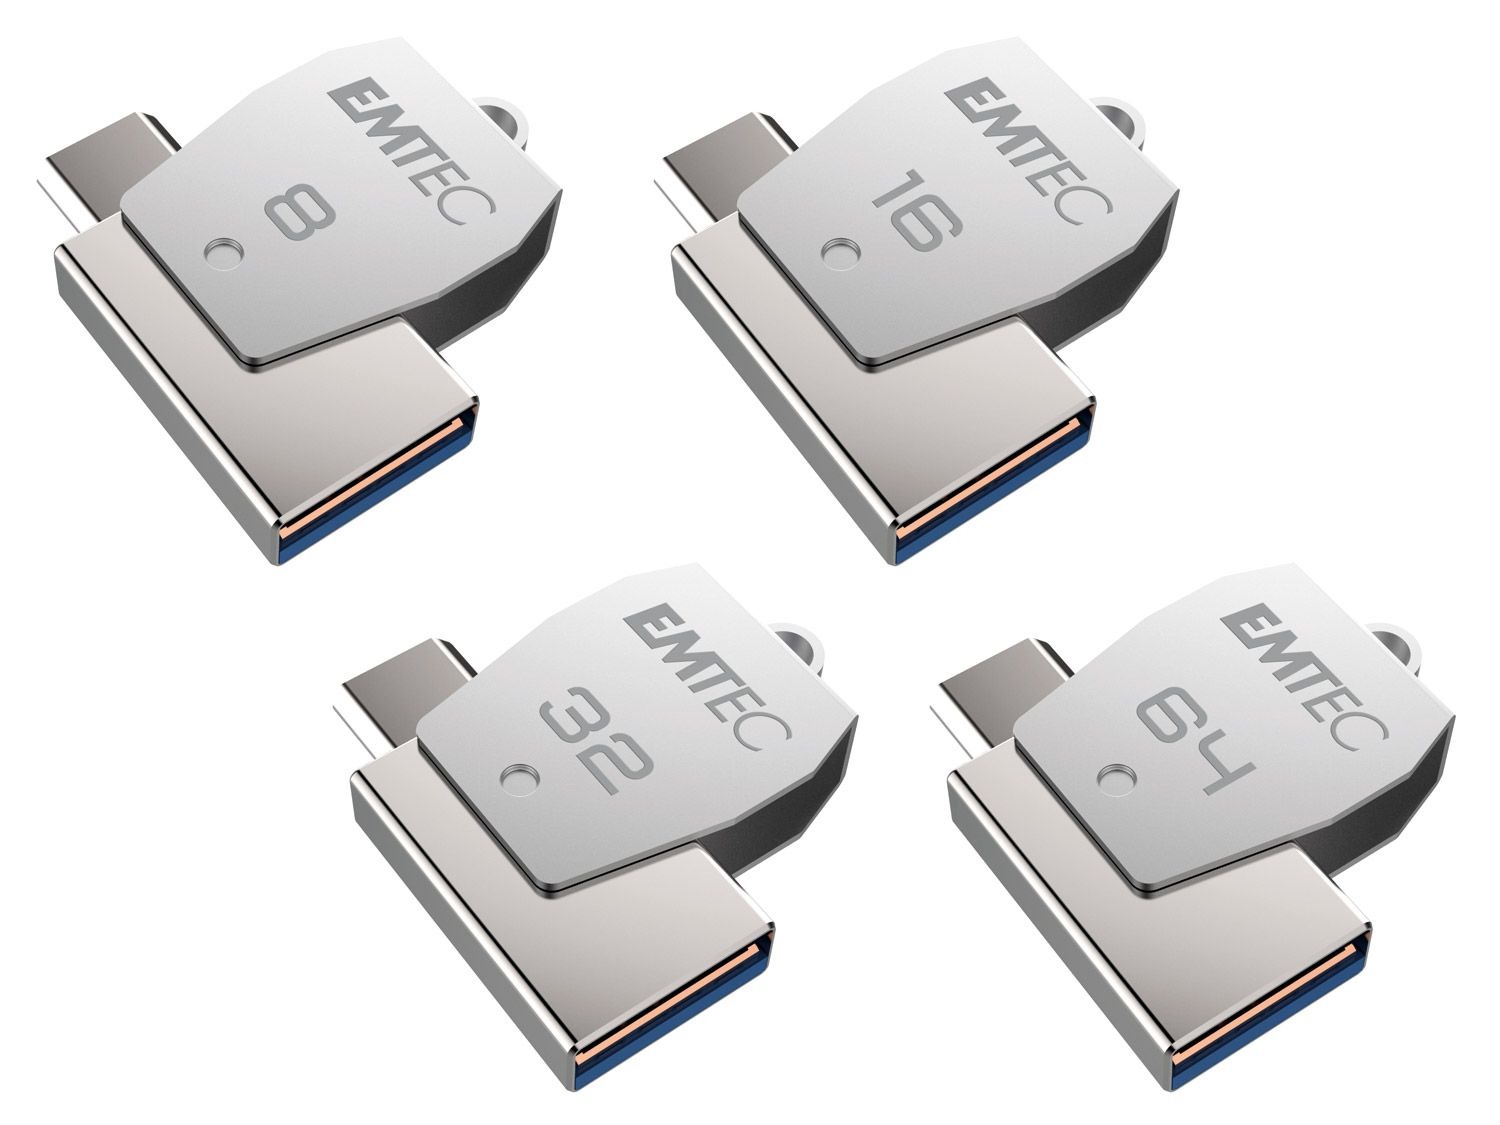 Emtec Dual USB 2.0 micro-USB Stick T250